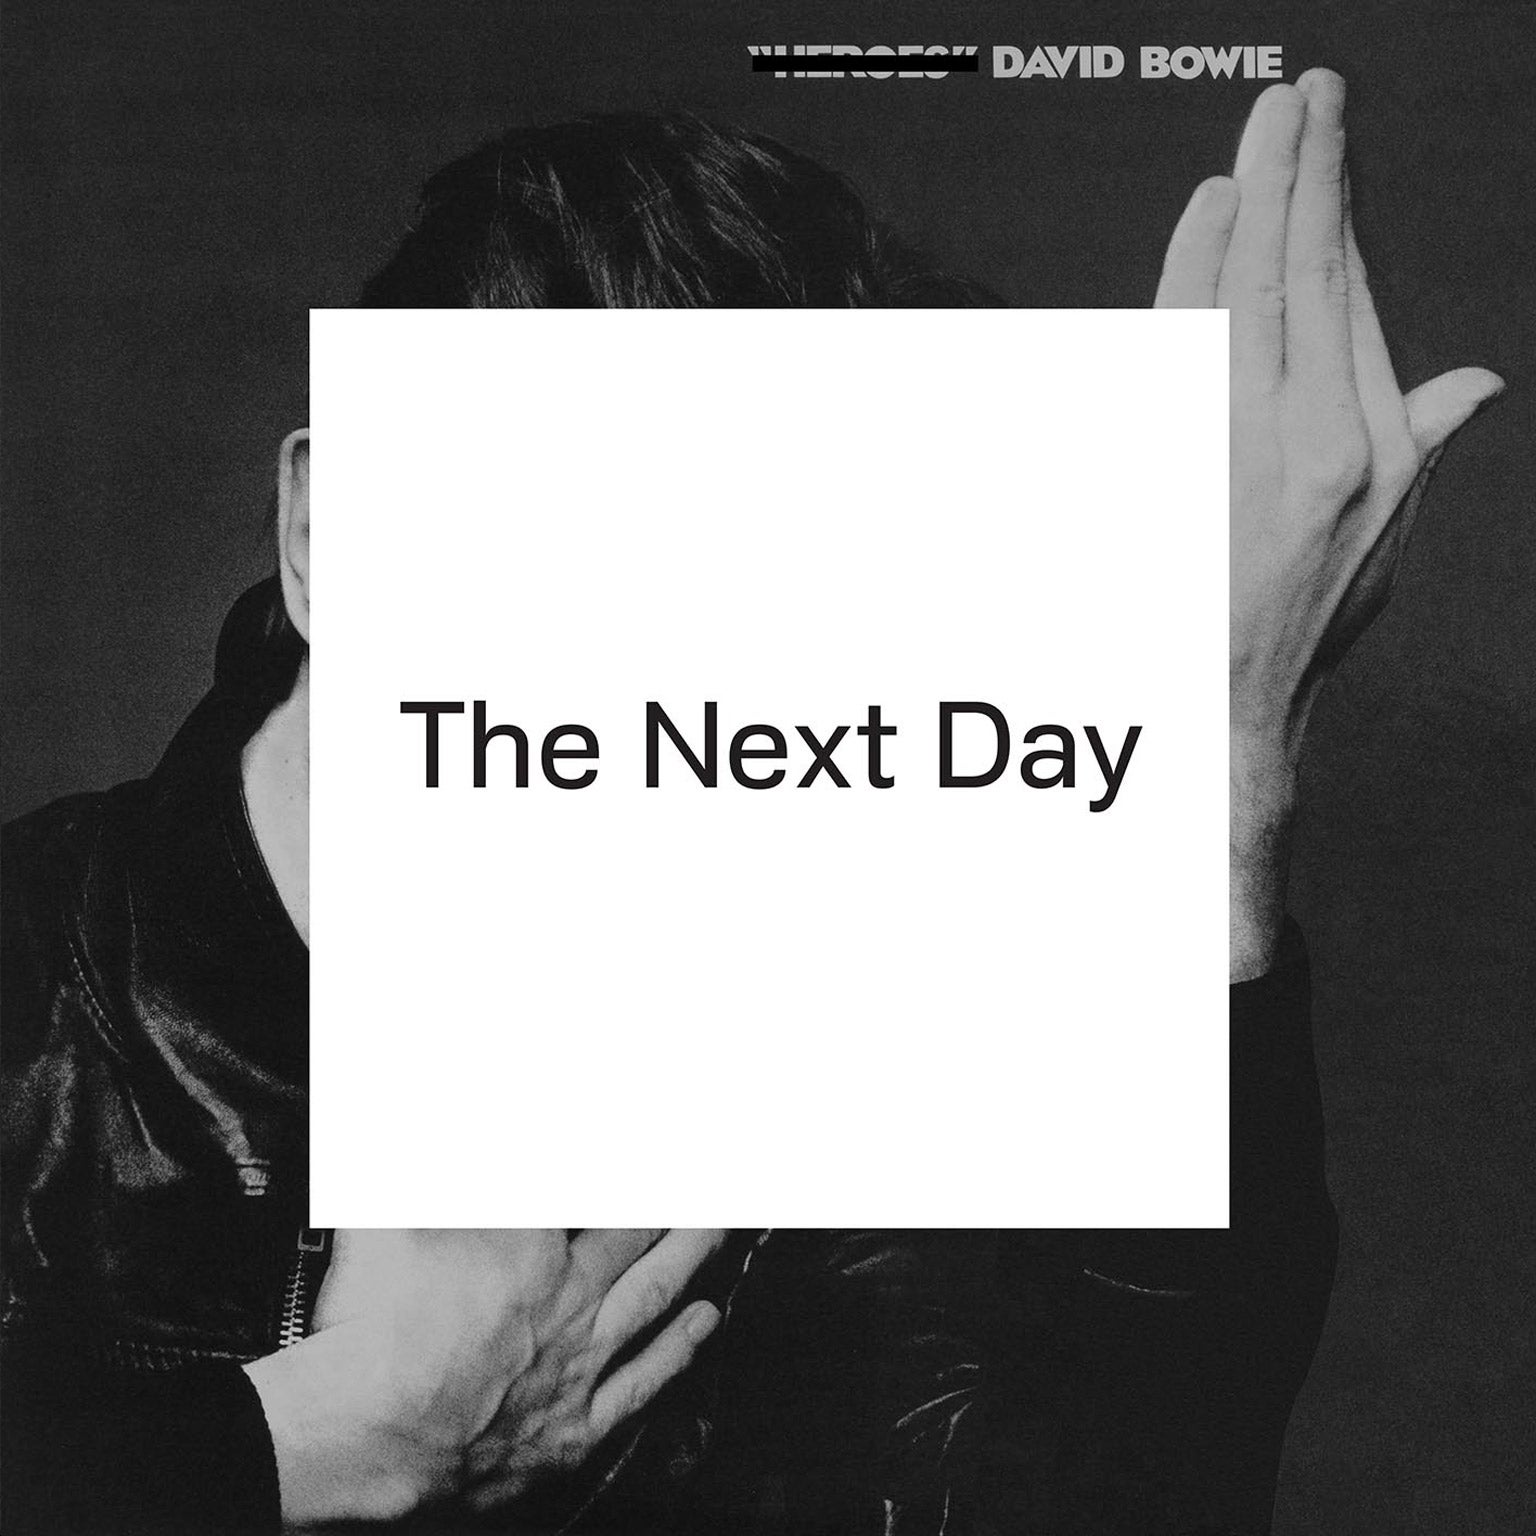 Bowie's ad-bomb inspiring album cover